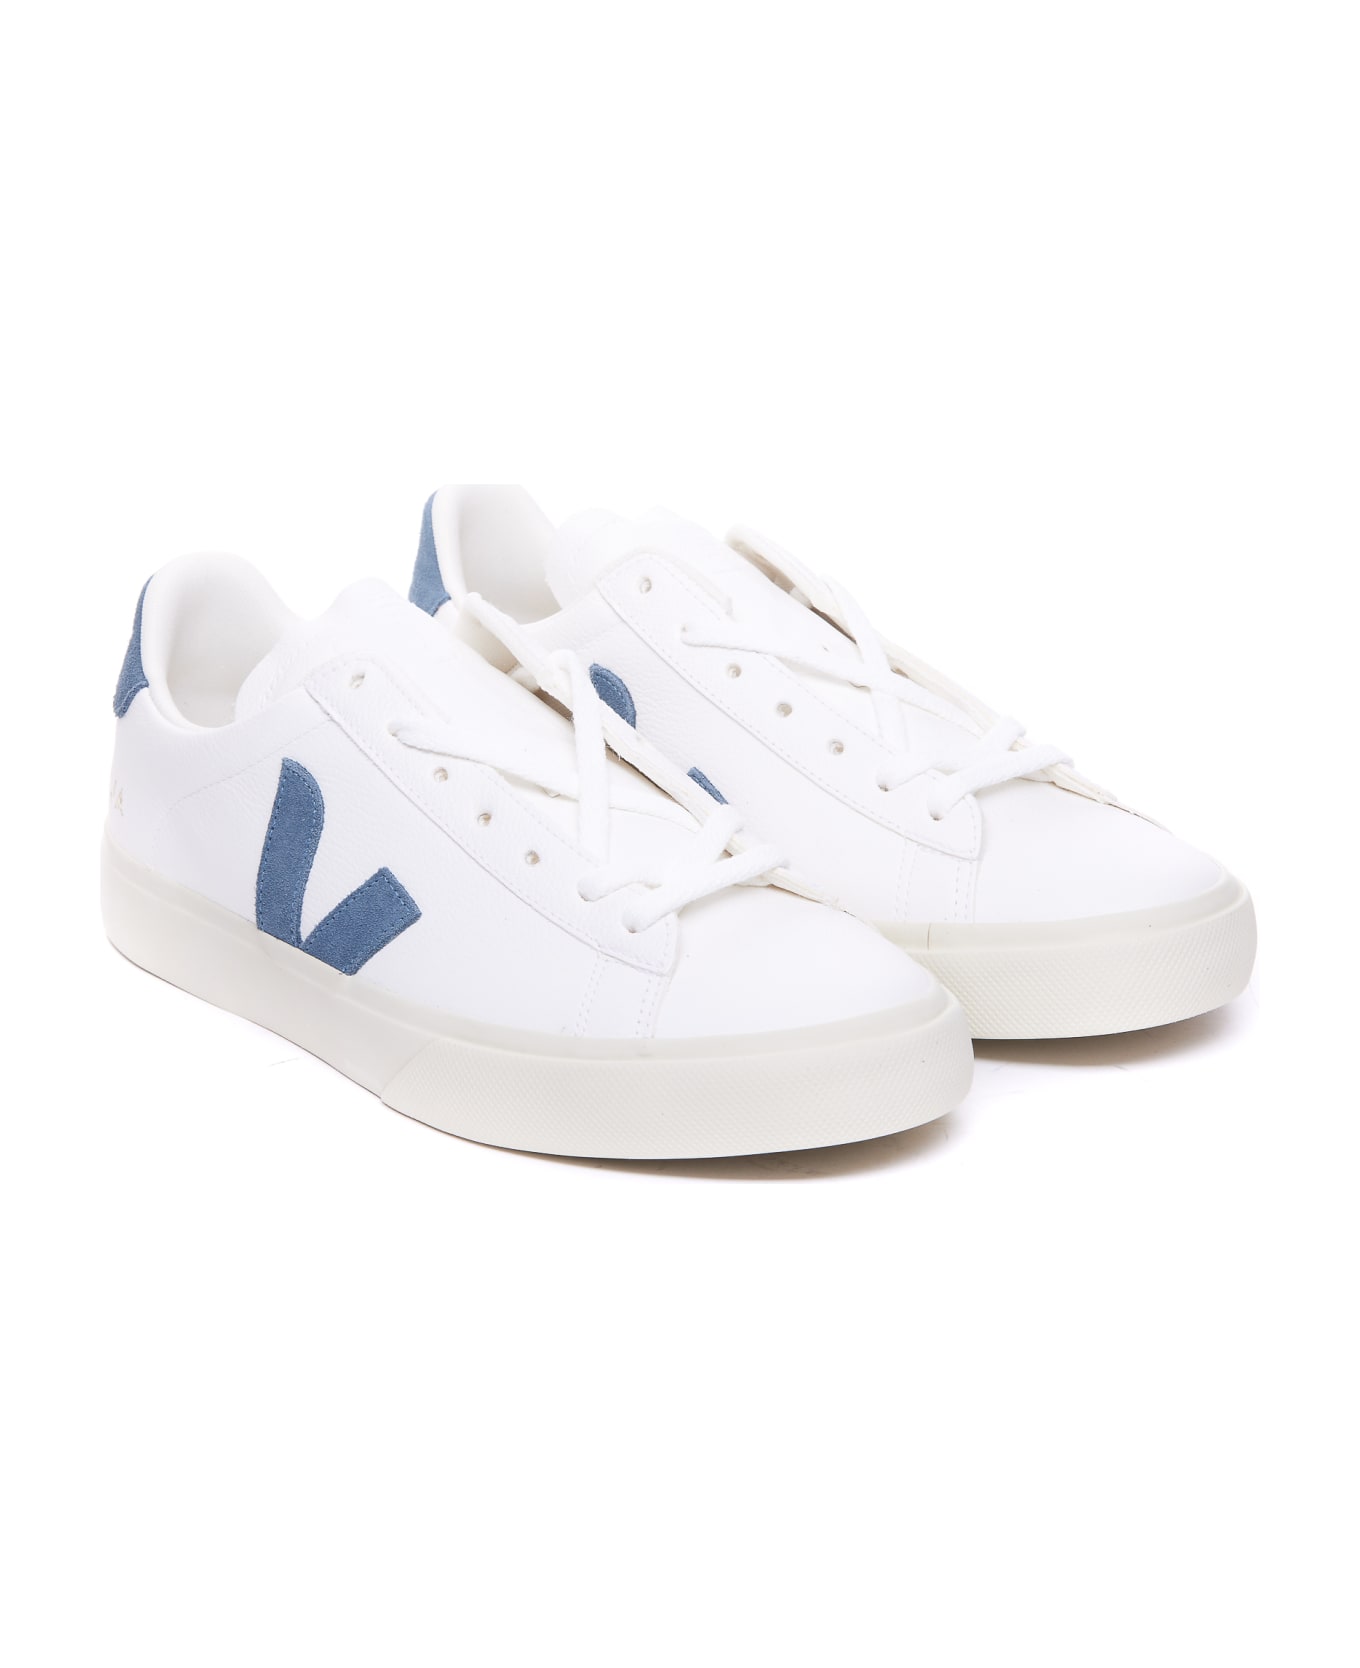 Veja Campo Sneakers - White